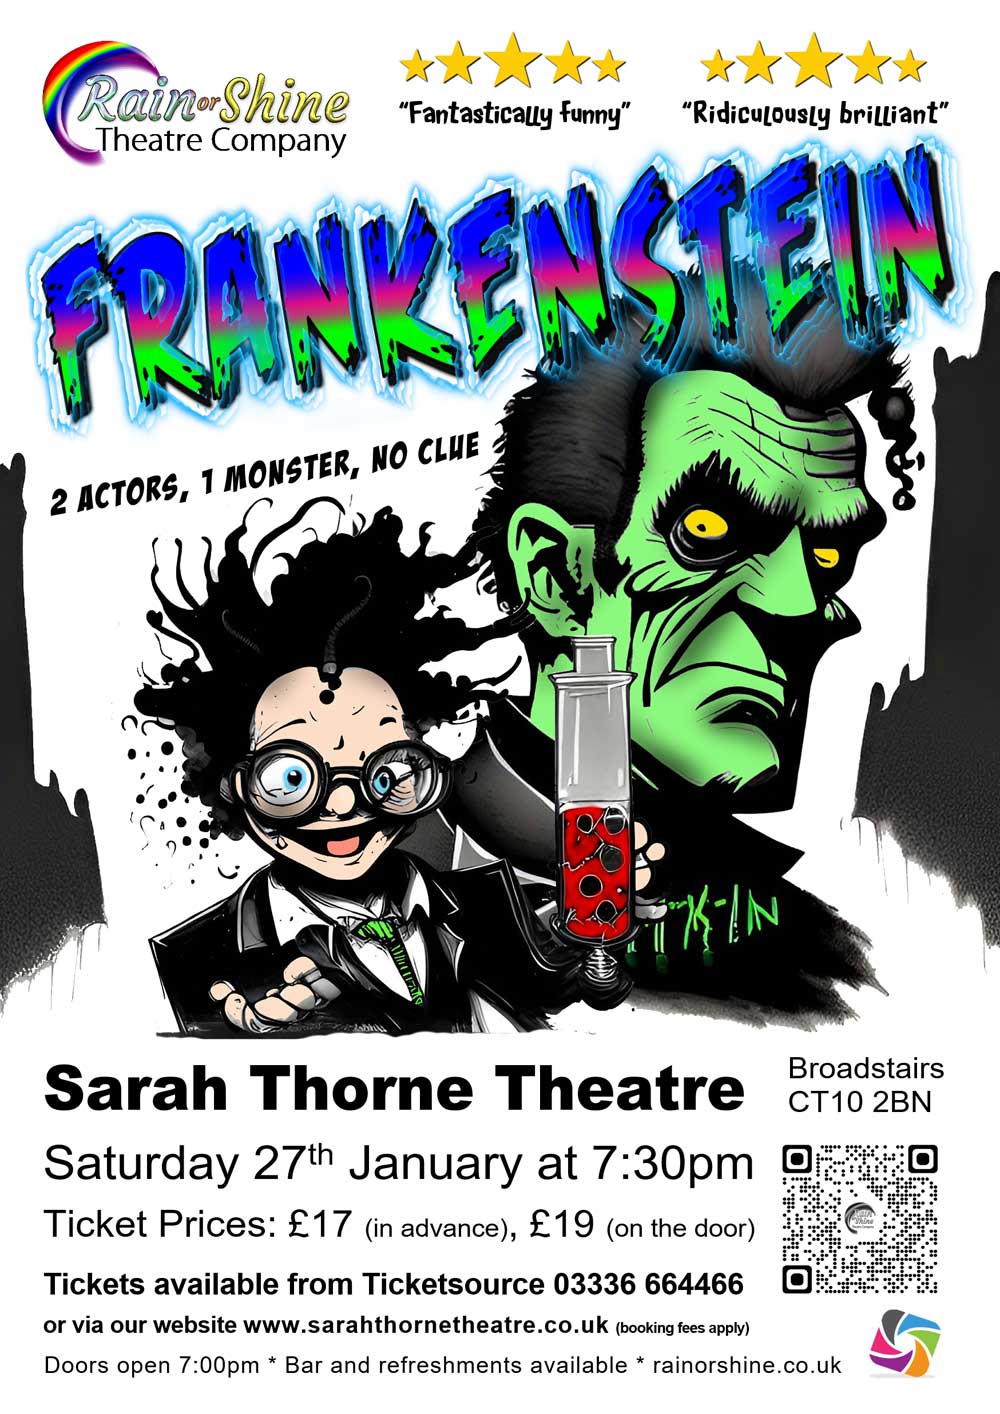 Image of Sarah Thorne Theatre event - Frankenstein